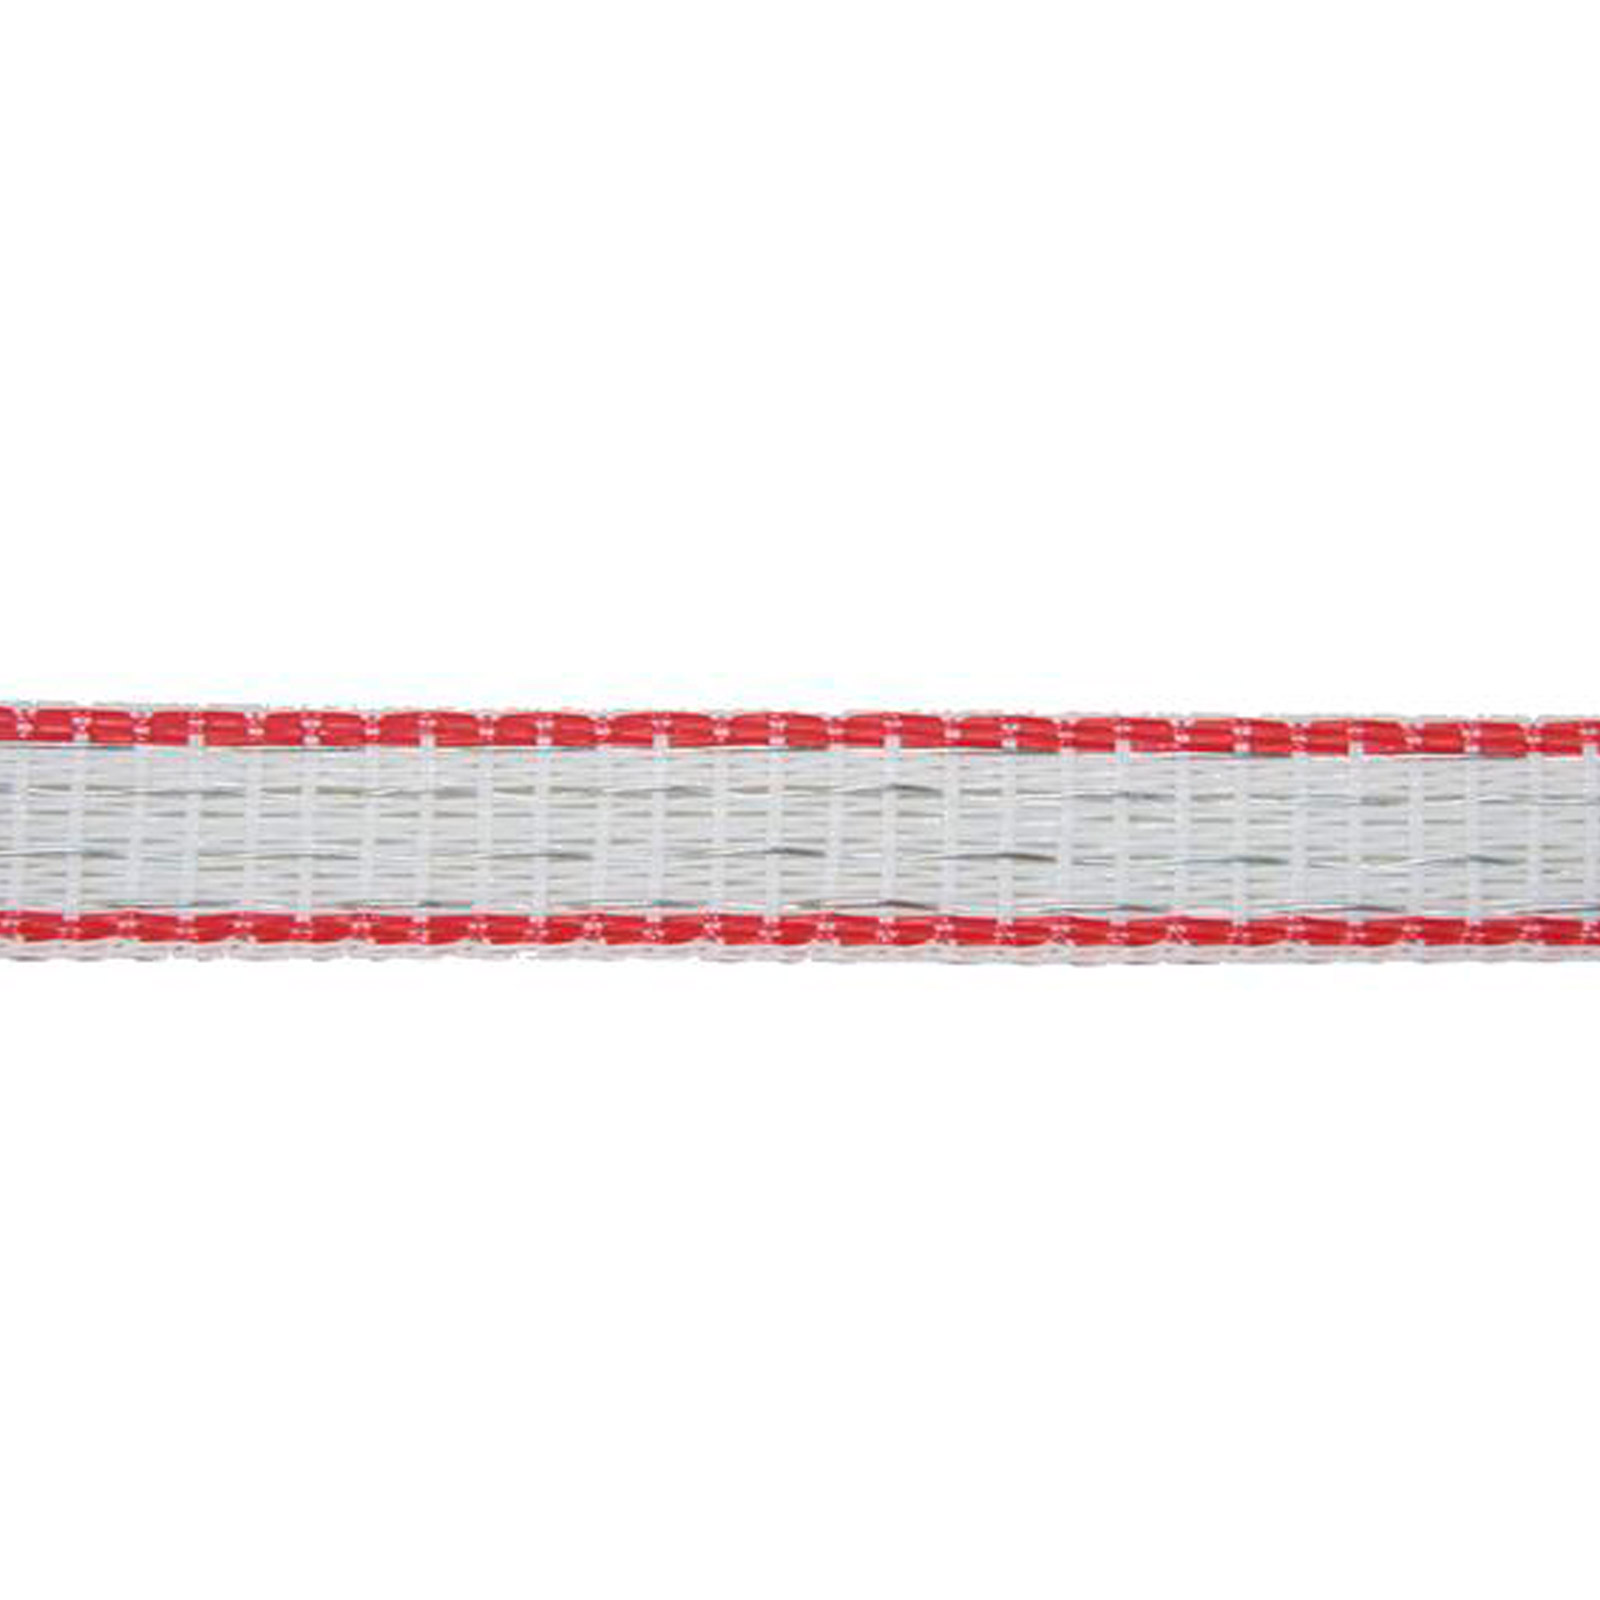 betesmarkstängselband 200m / 1000m röd-vit 200 m x 12 mm